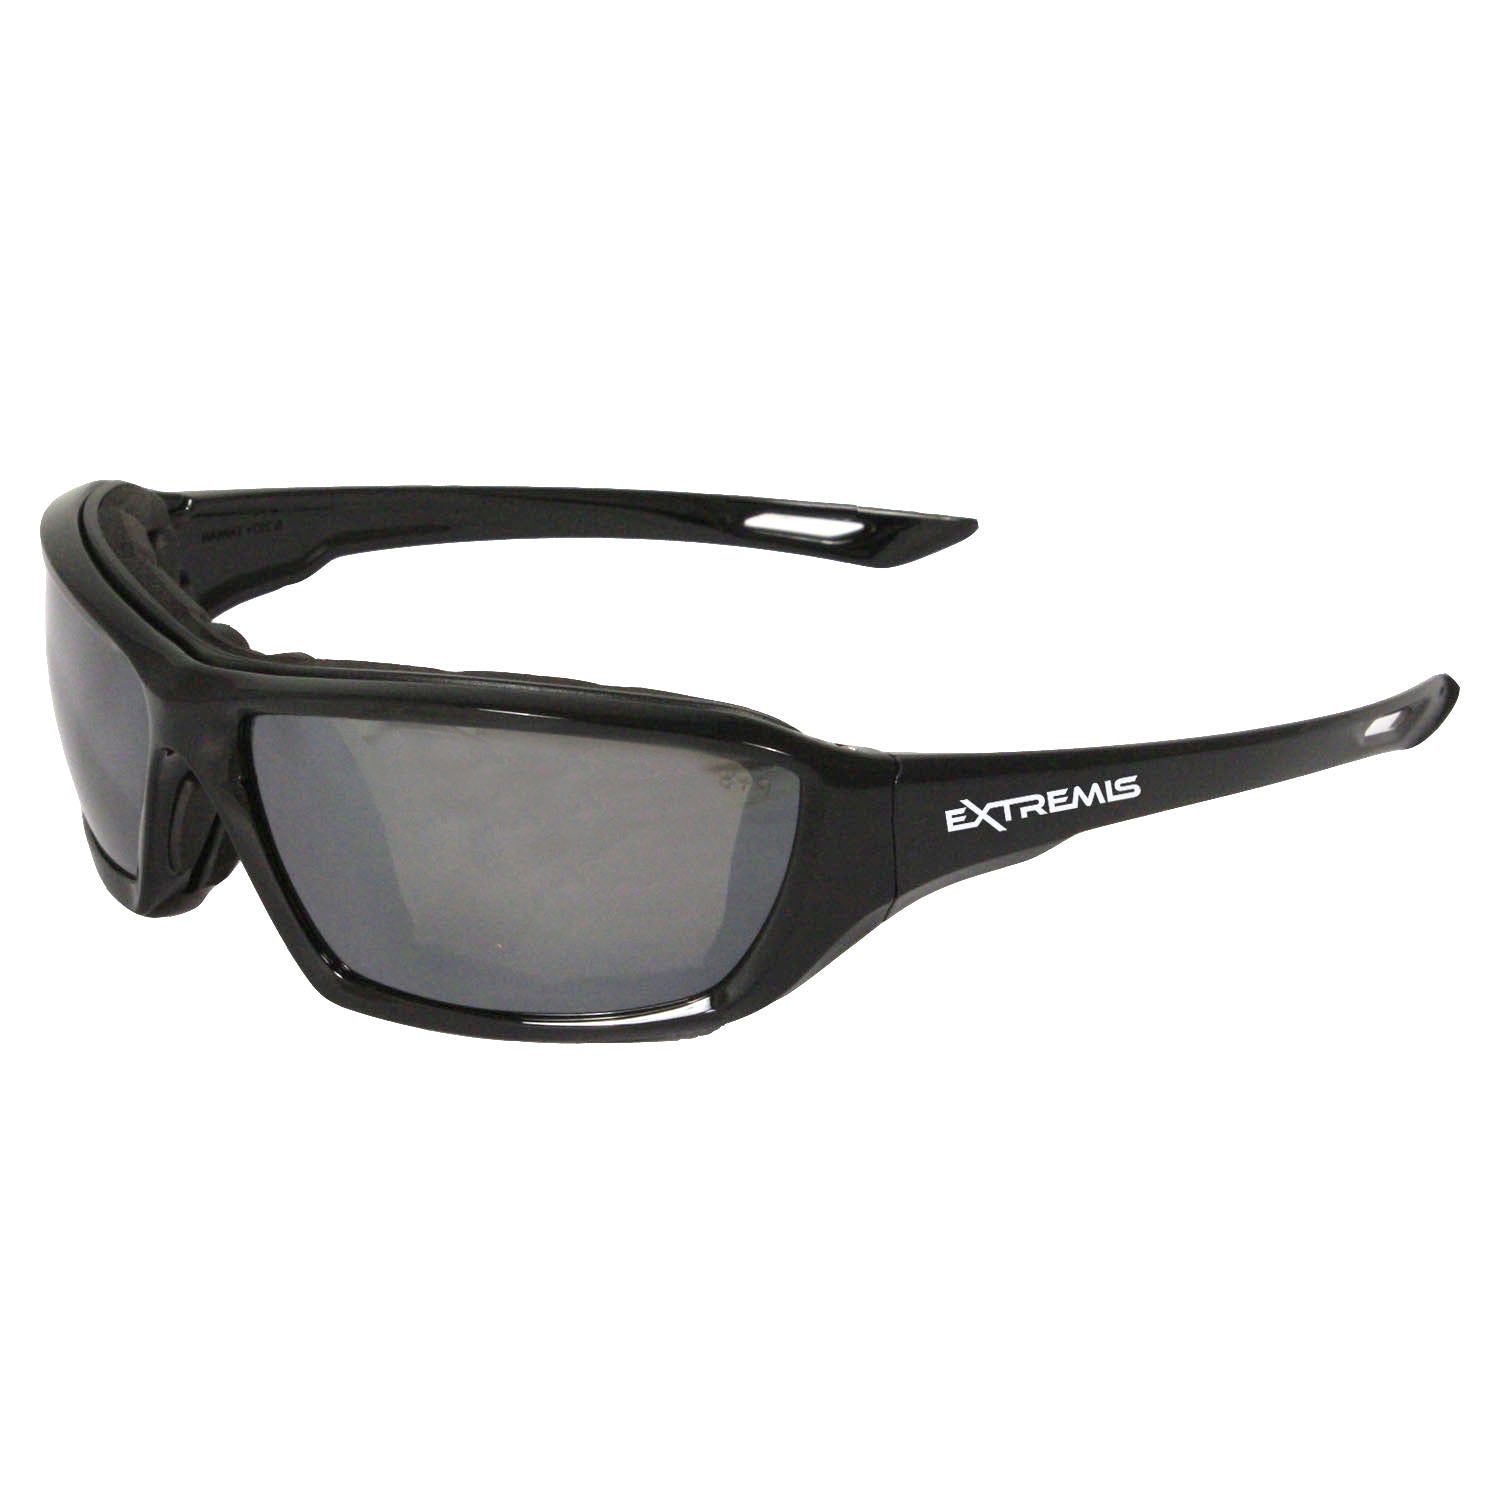 Gafas de seguridad Extremis® - Montura negra - Lentes antivaho de espejo plateado